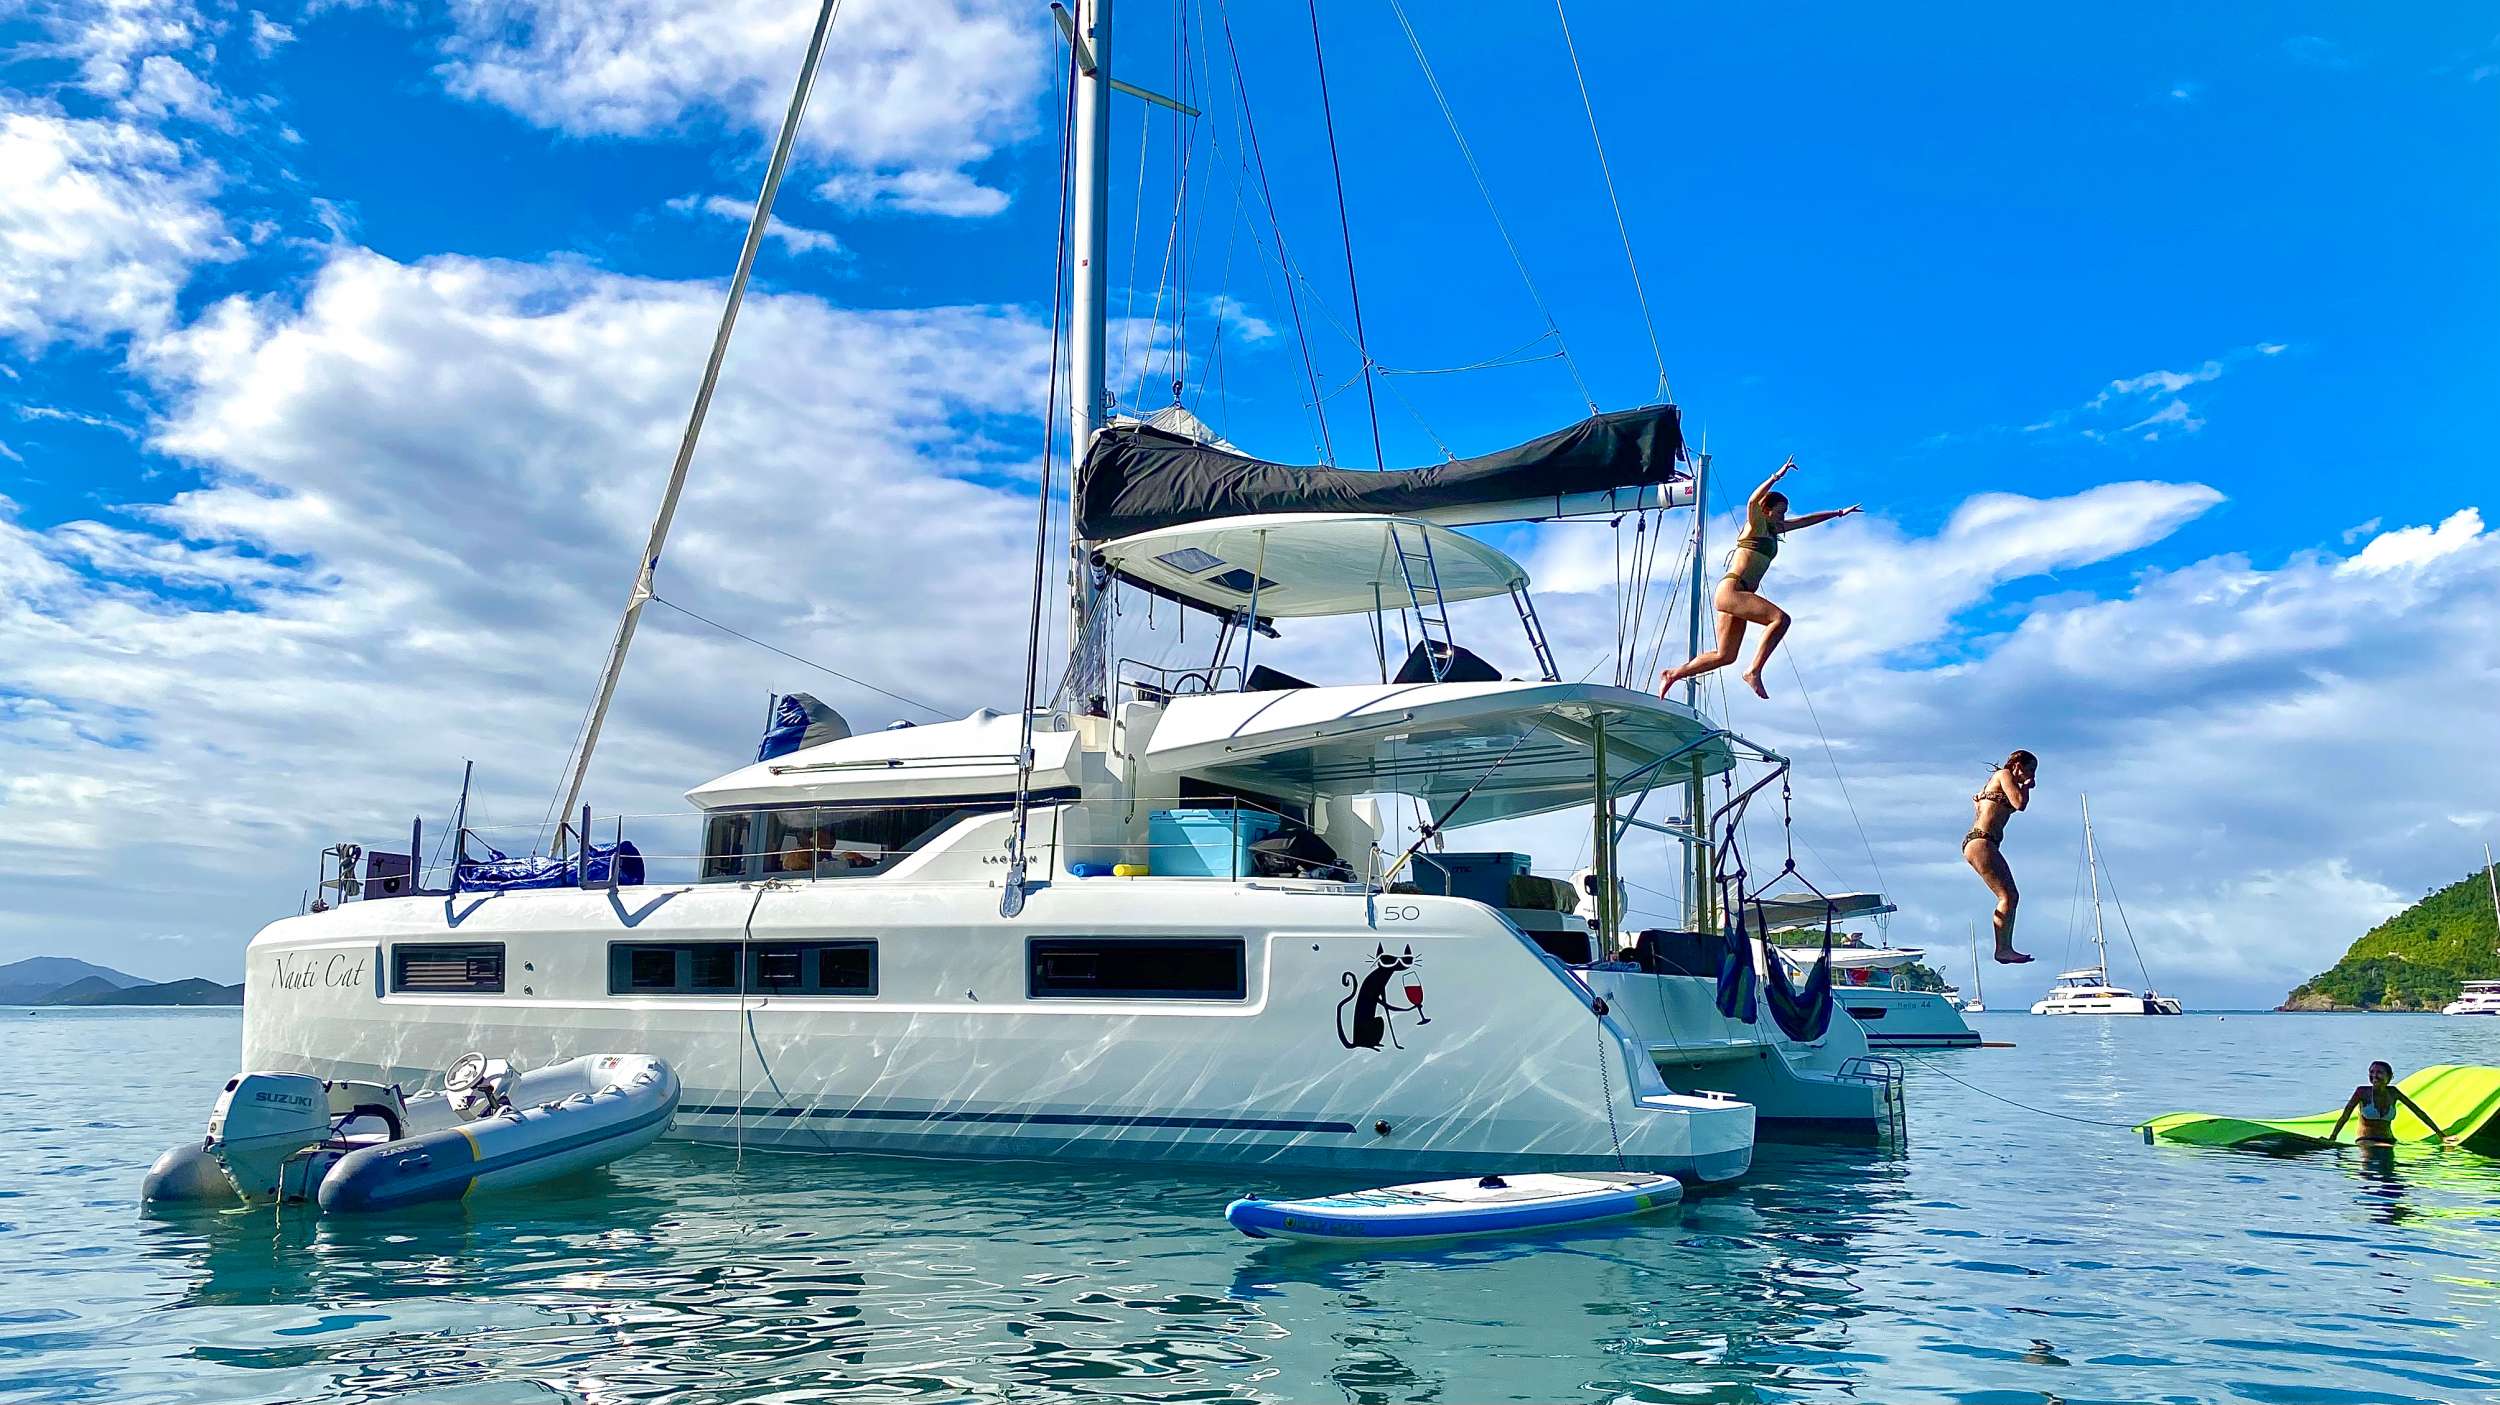 NAUTI CAT - Yacht Charter Nassau & Boat hire in Bahamas 1